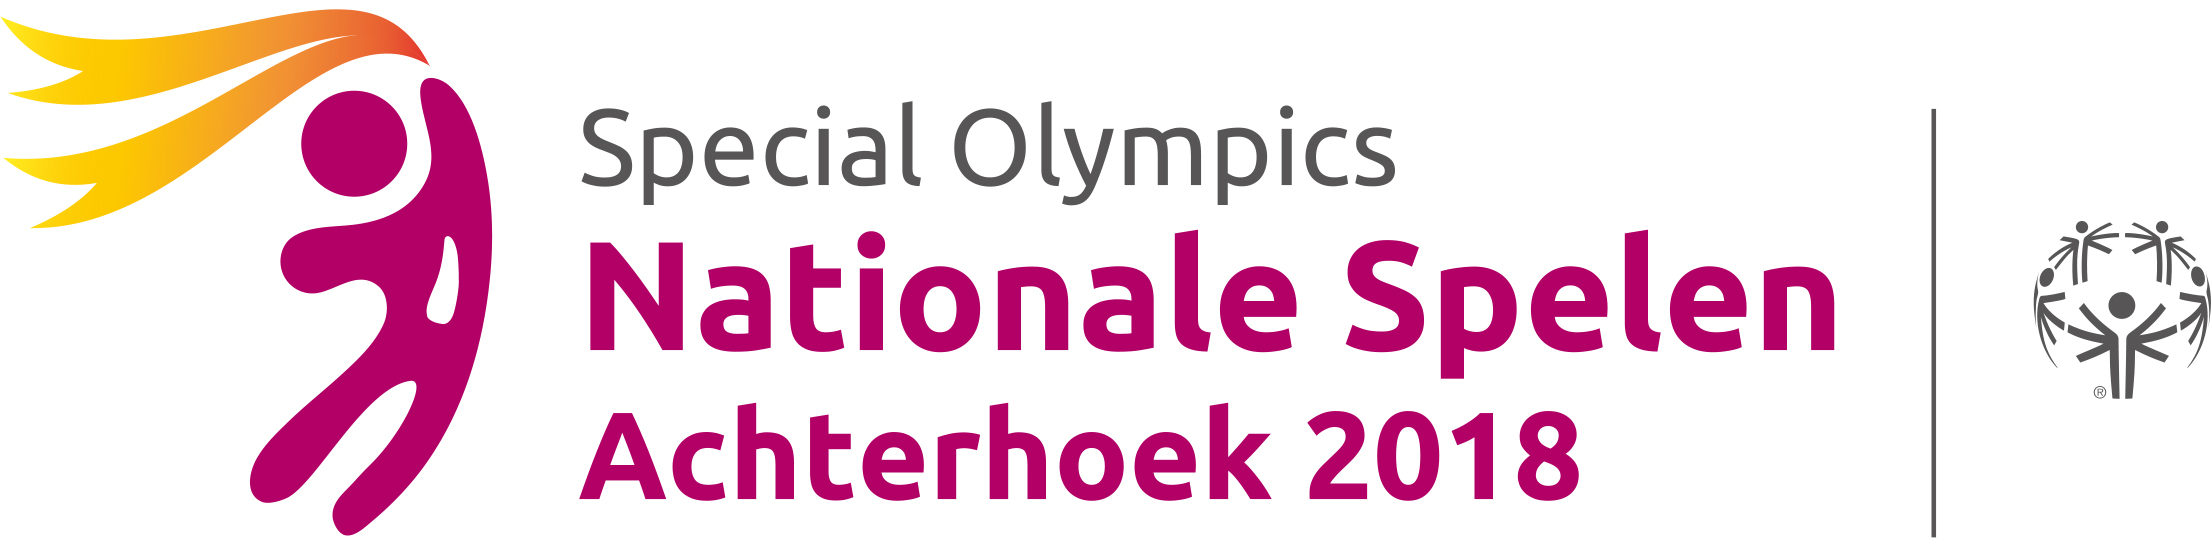 Special Olympics Logo SON Achterhoek2018 vlam horizontaal